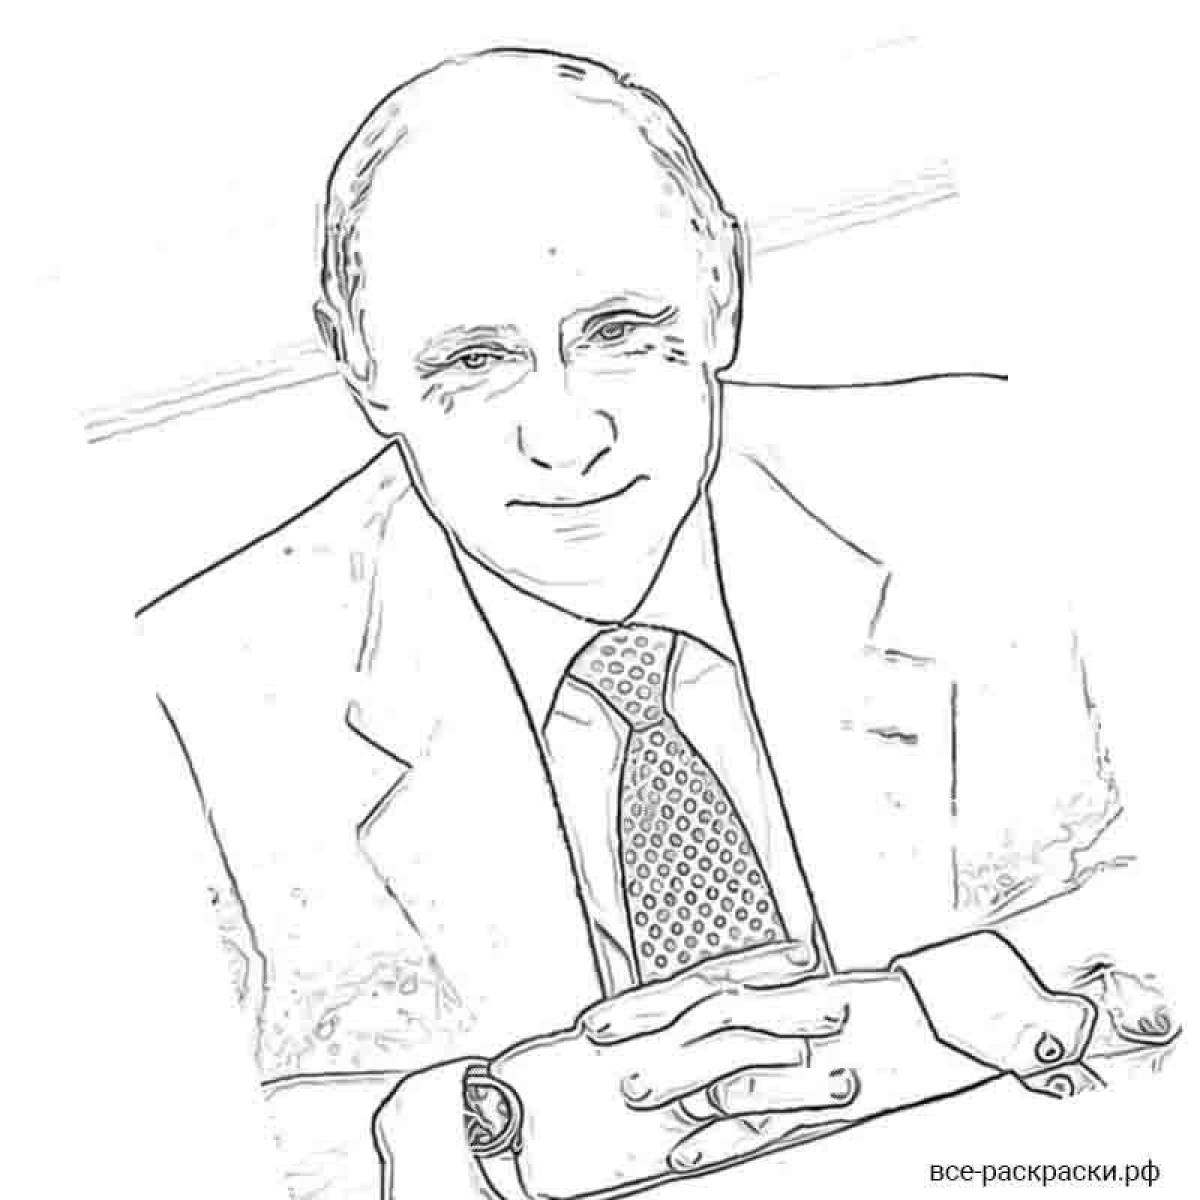 Putin's bright coloring page